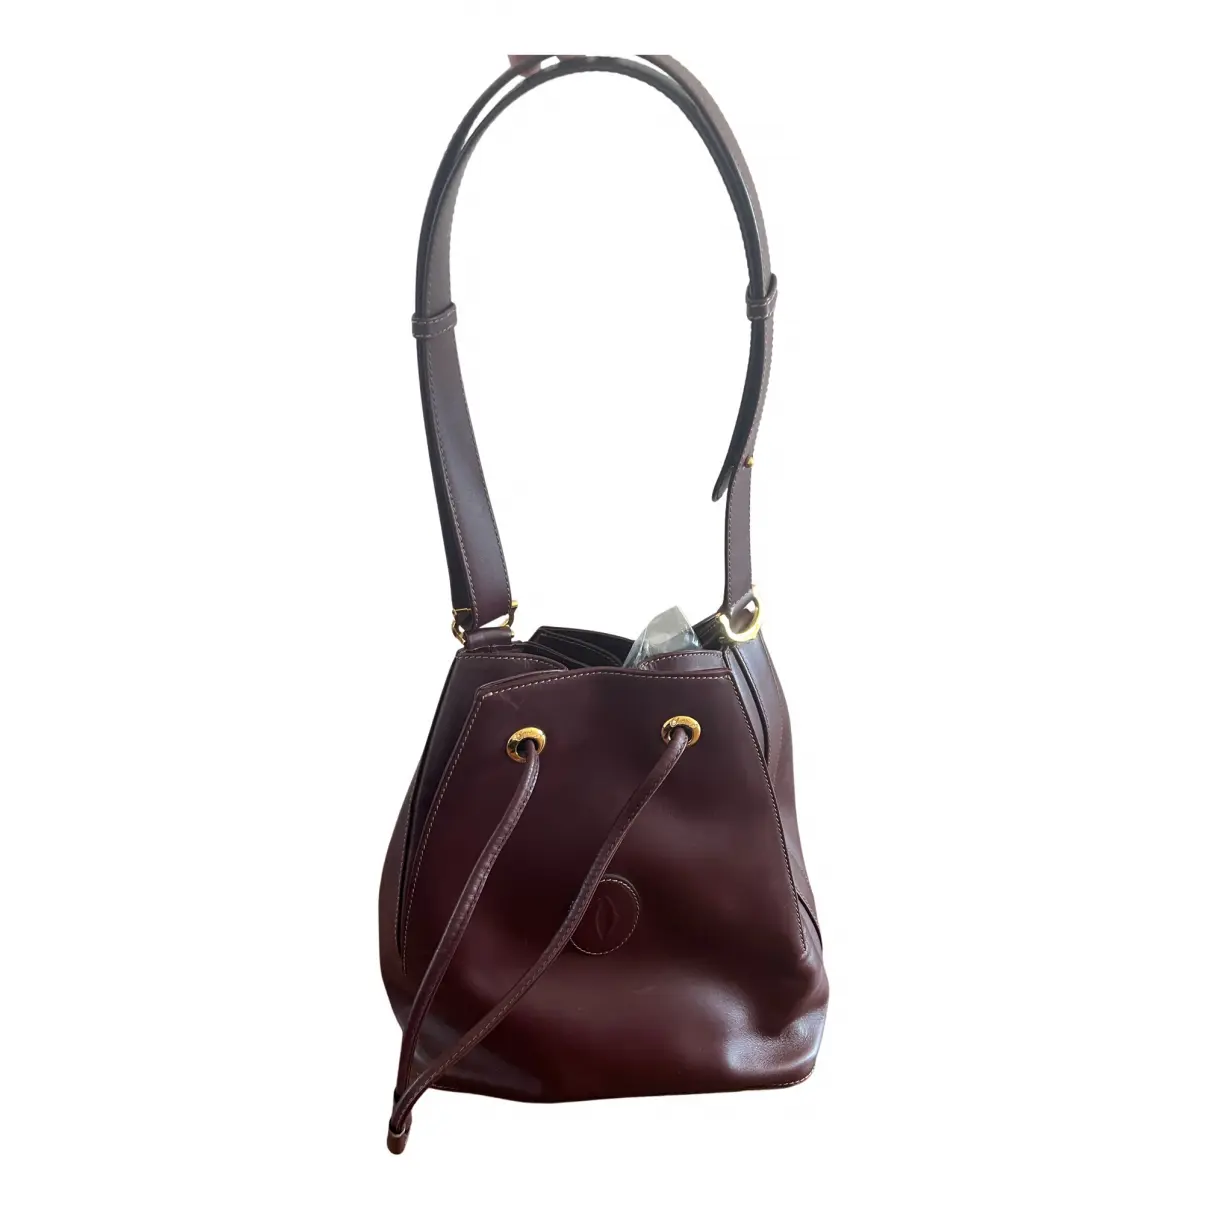 Leather handbag Cartier